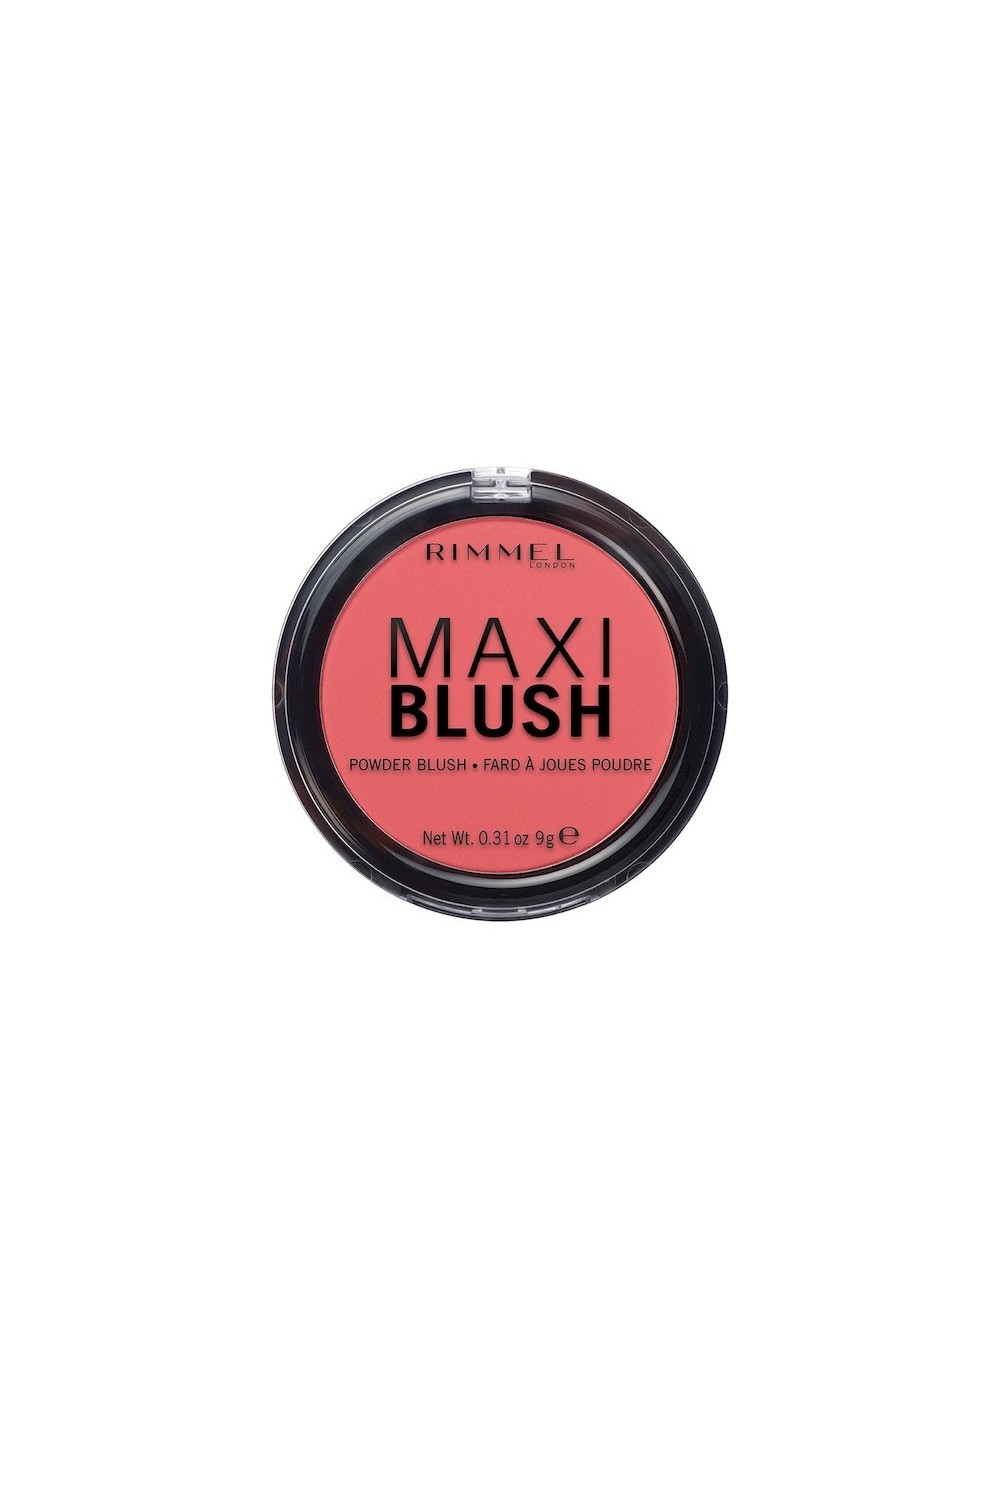 Rimmel London Maxi Blush Powder Blush 003 Wild Card 9g